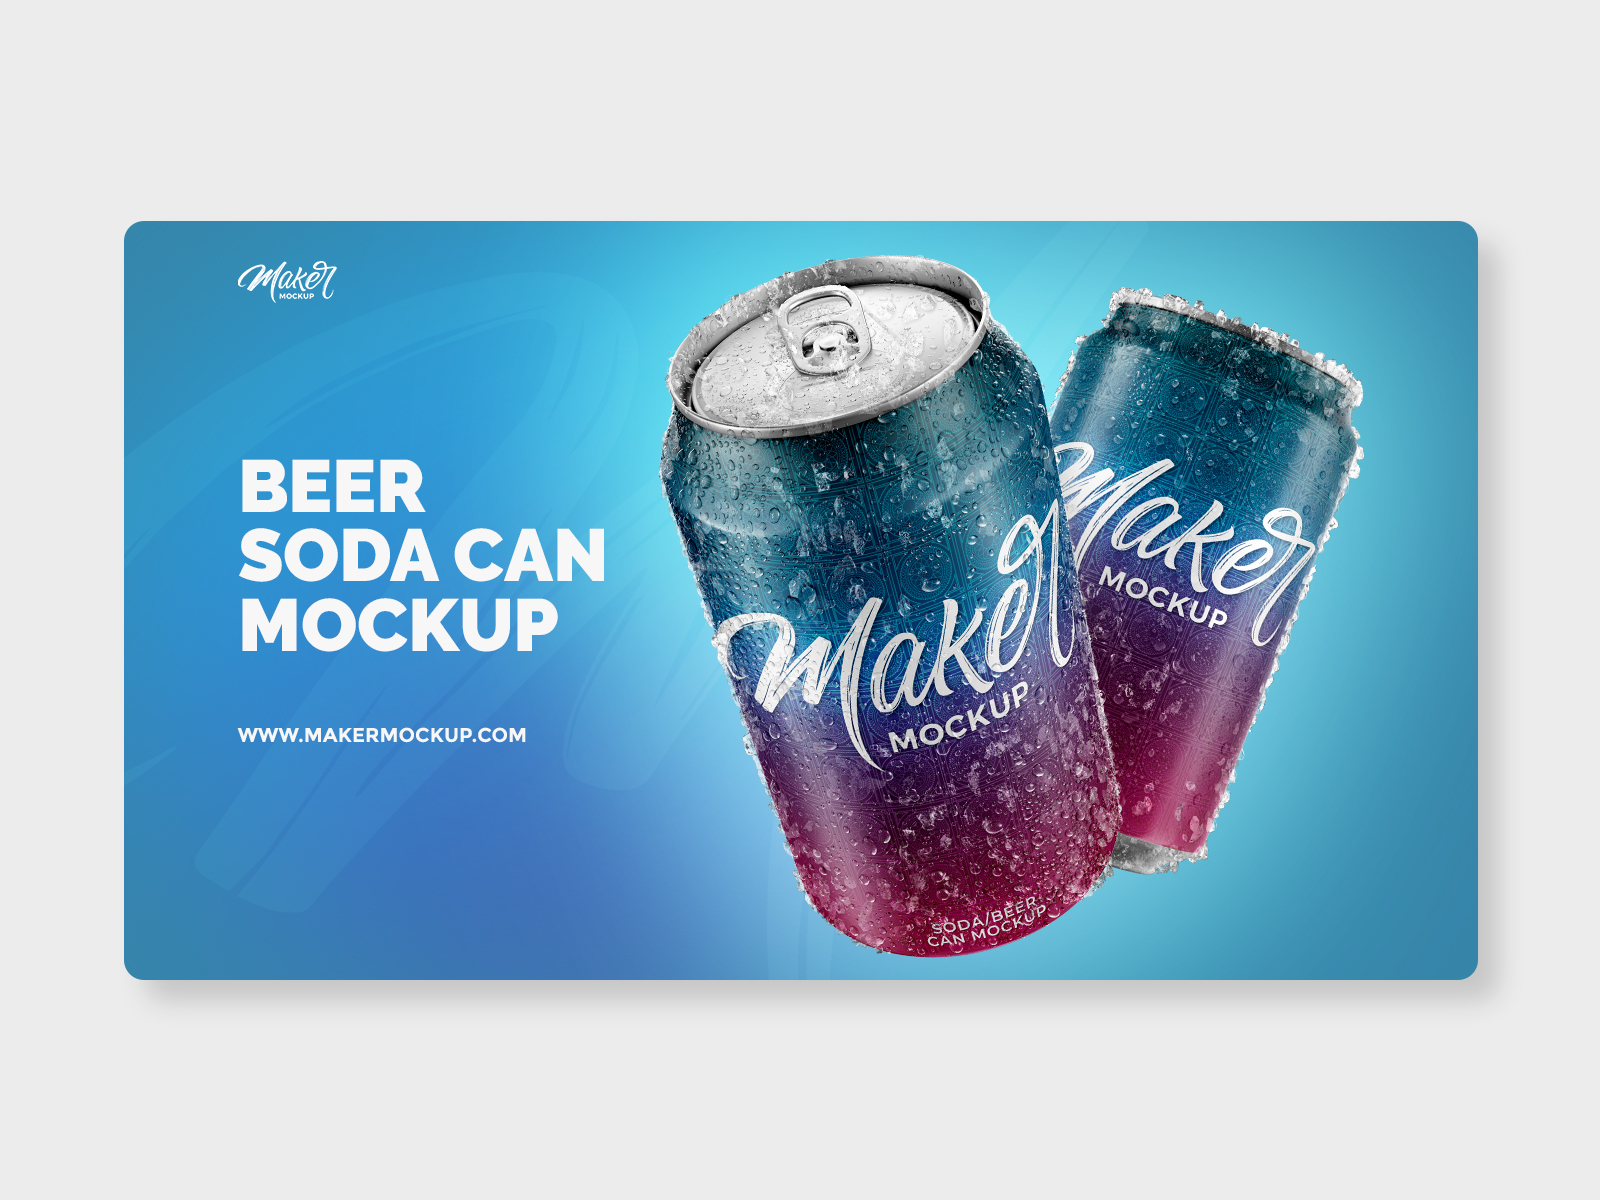 Download Mockup Lata - Can Mockup by Maker Mockup on Dribbble